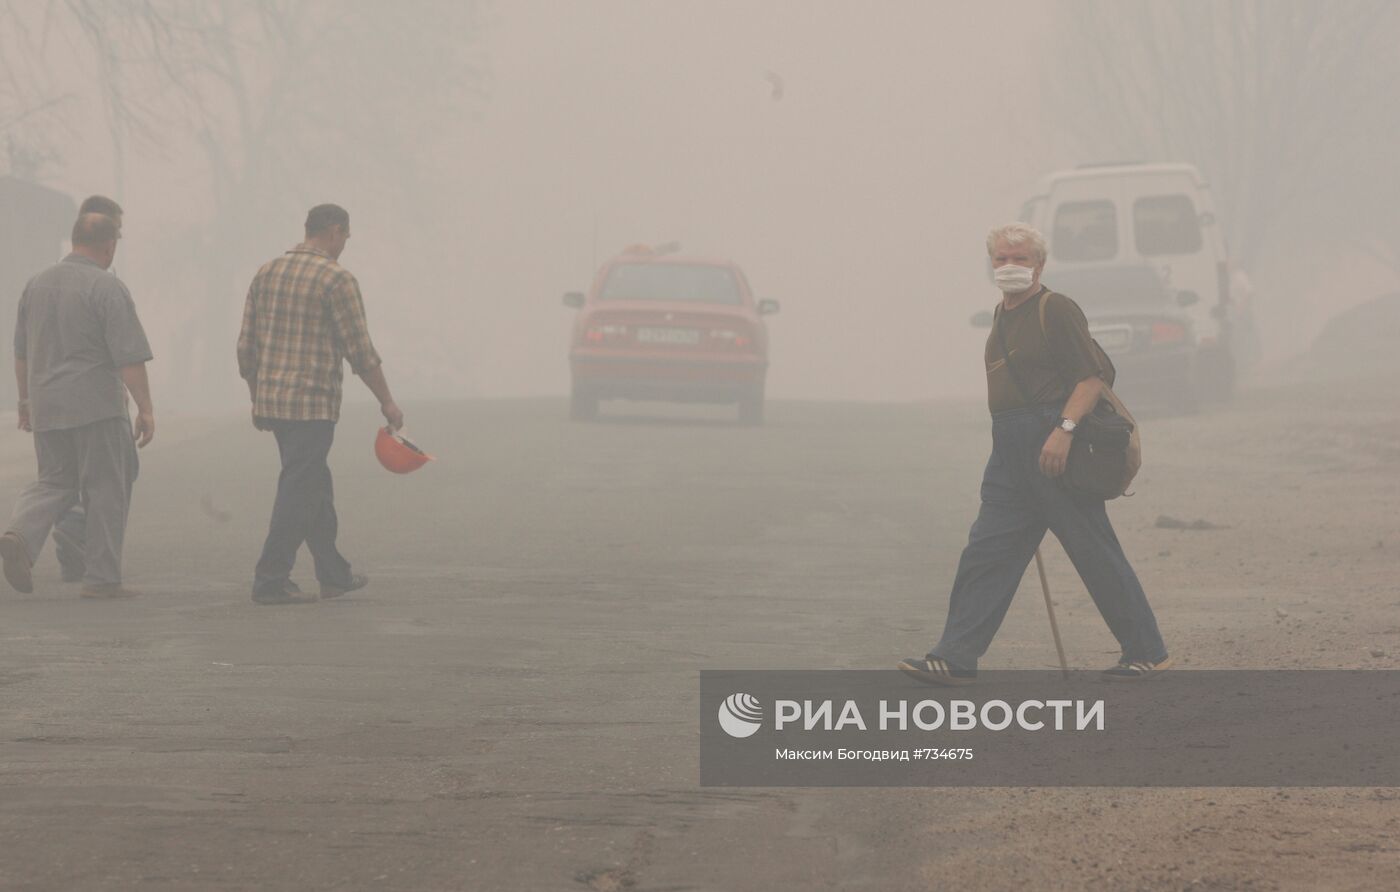 Поселок Борковка окутан дымом и смогом